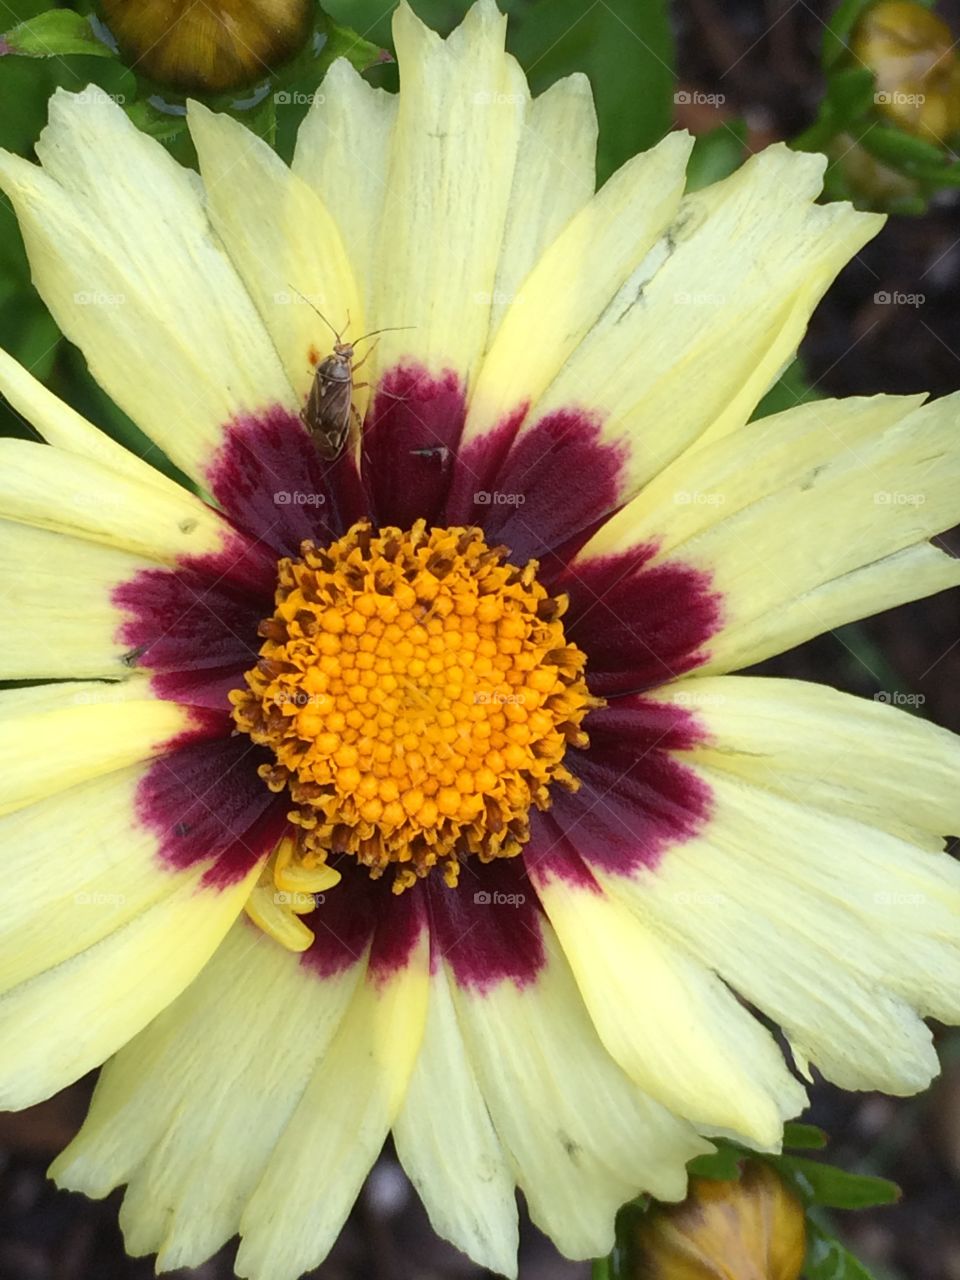 Bug/flower 